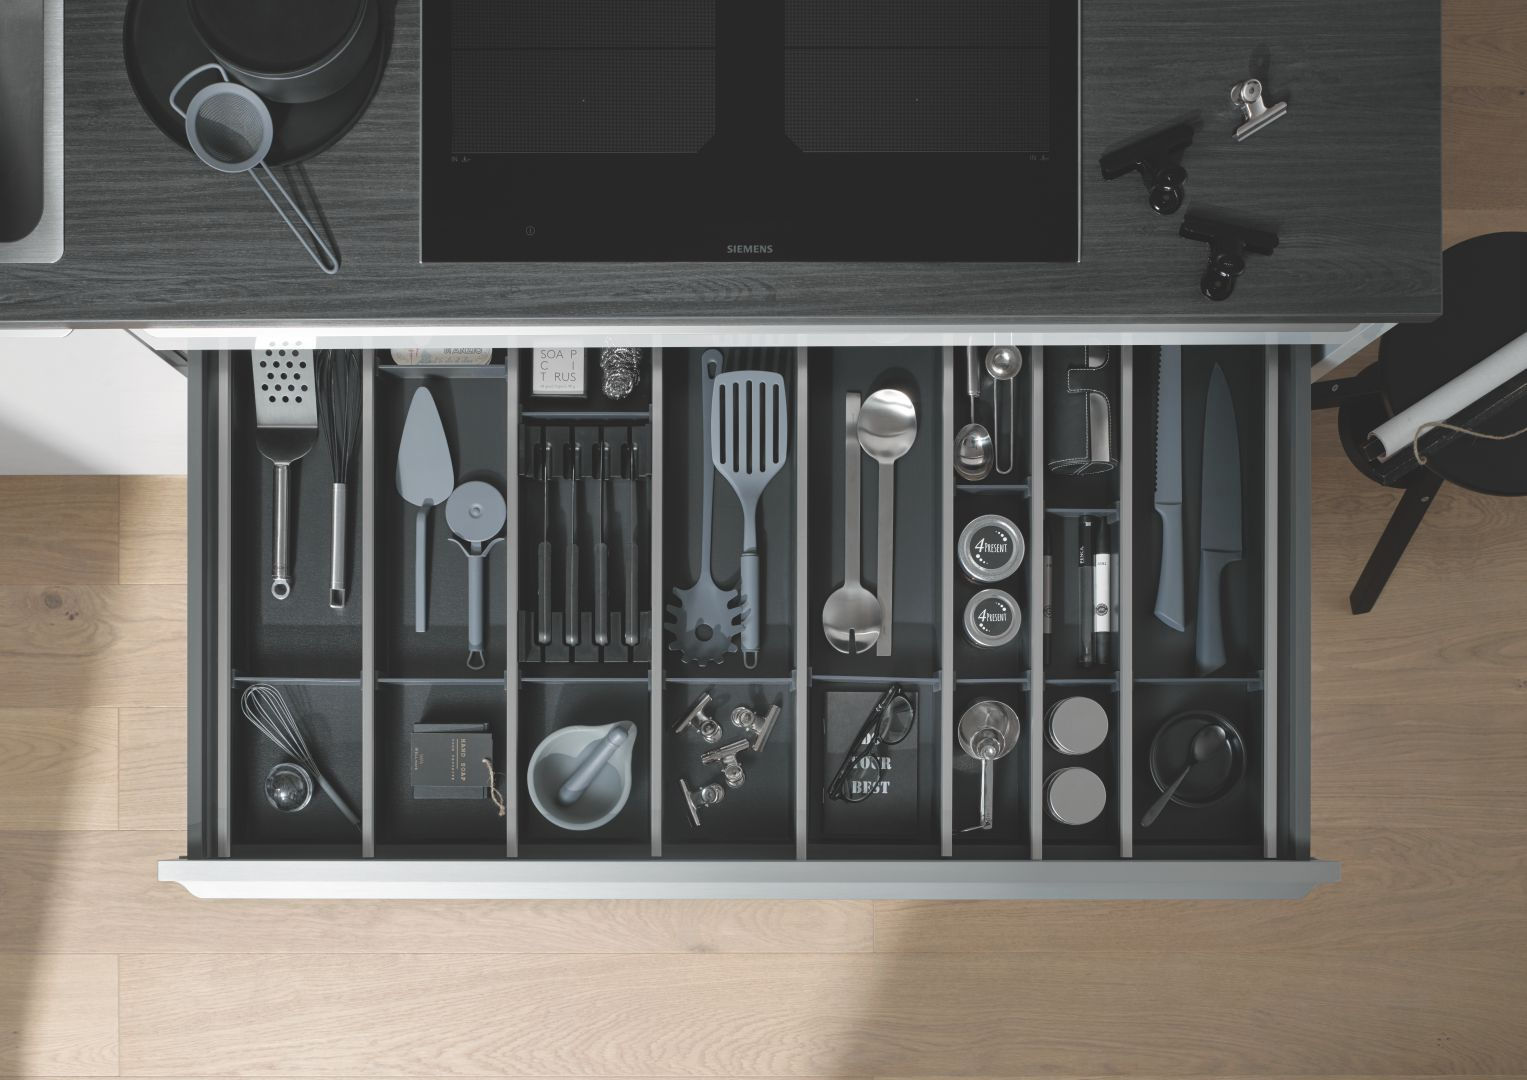 modern light grey kitchen cabinets